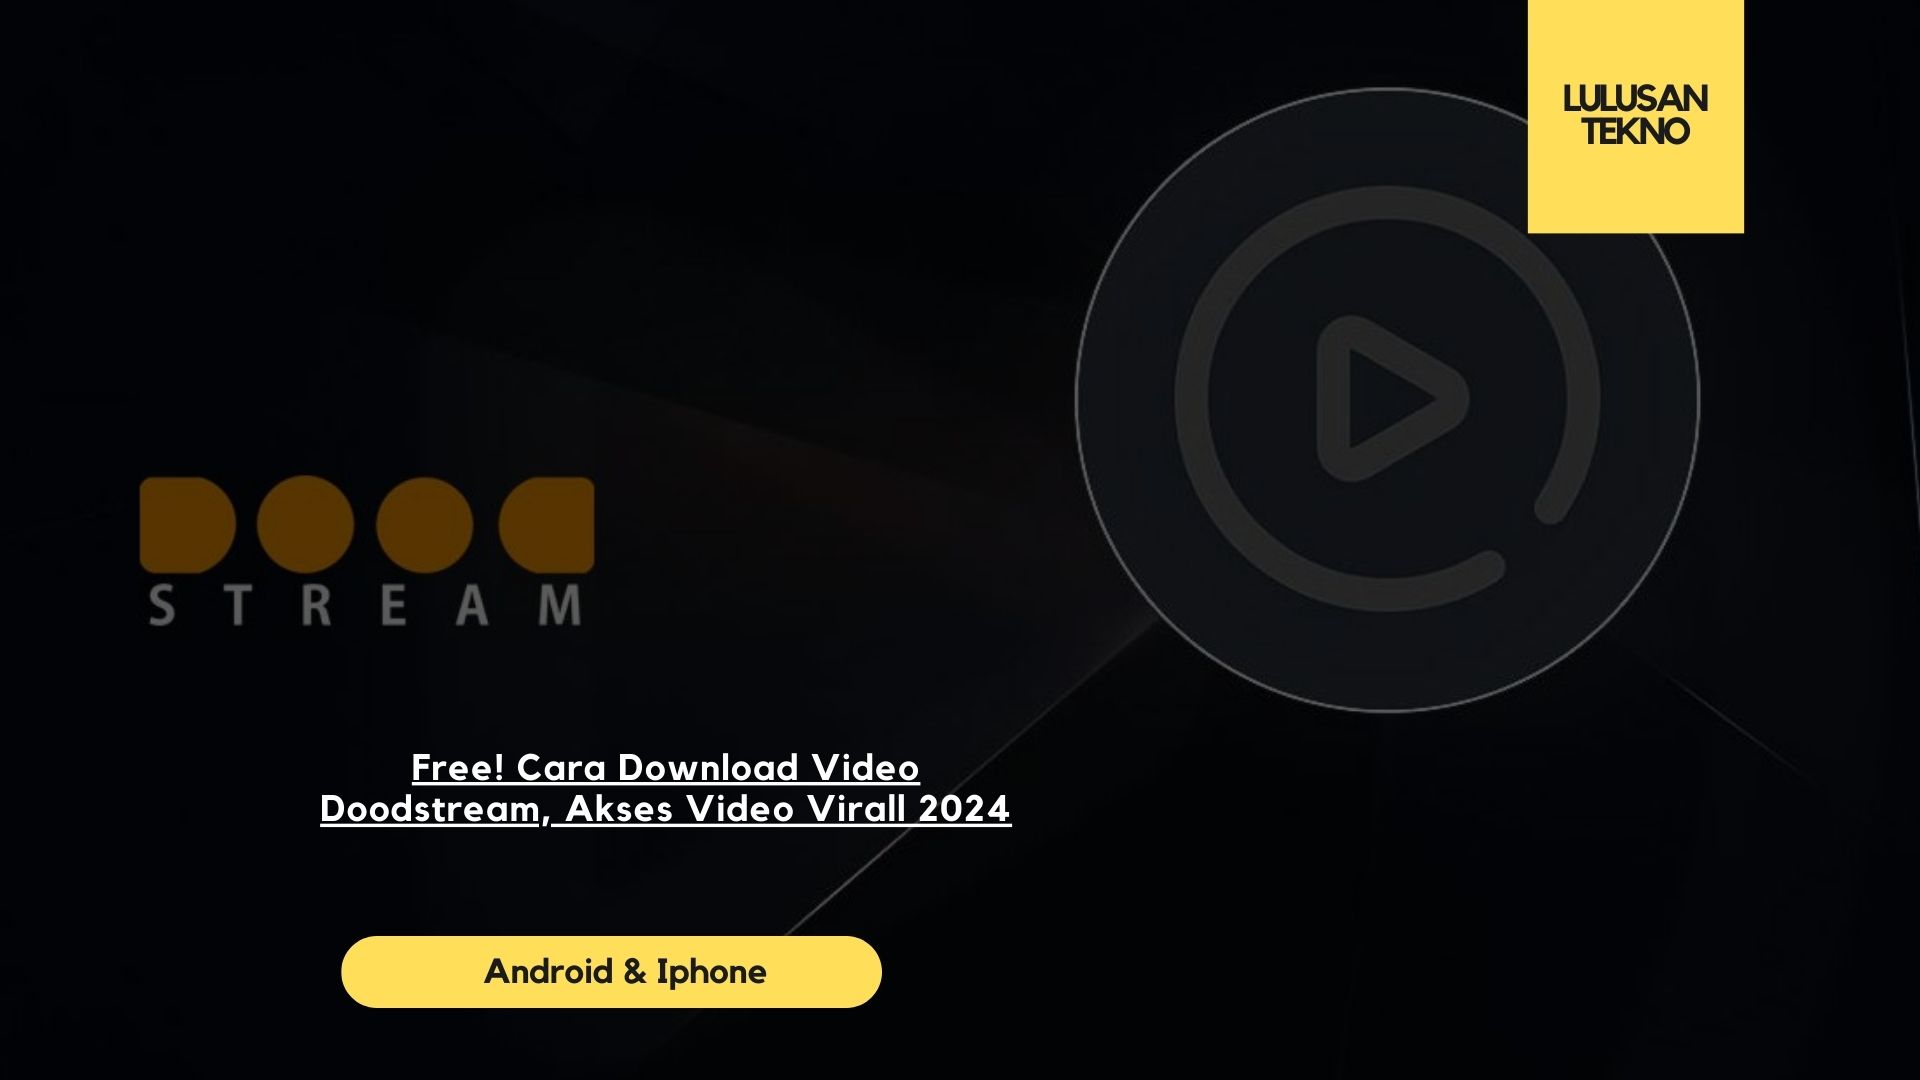 Free! Cara Download Video Doodstream, Akses Video Virall 2024